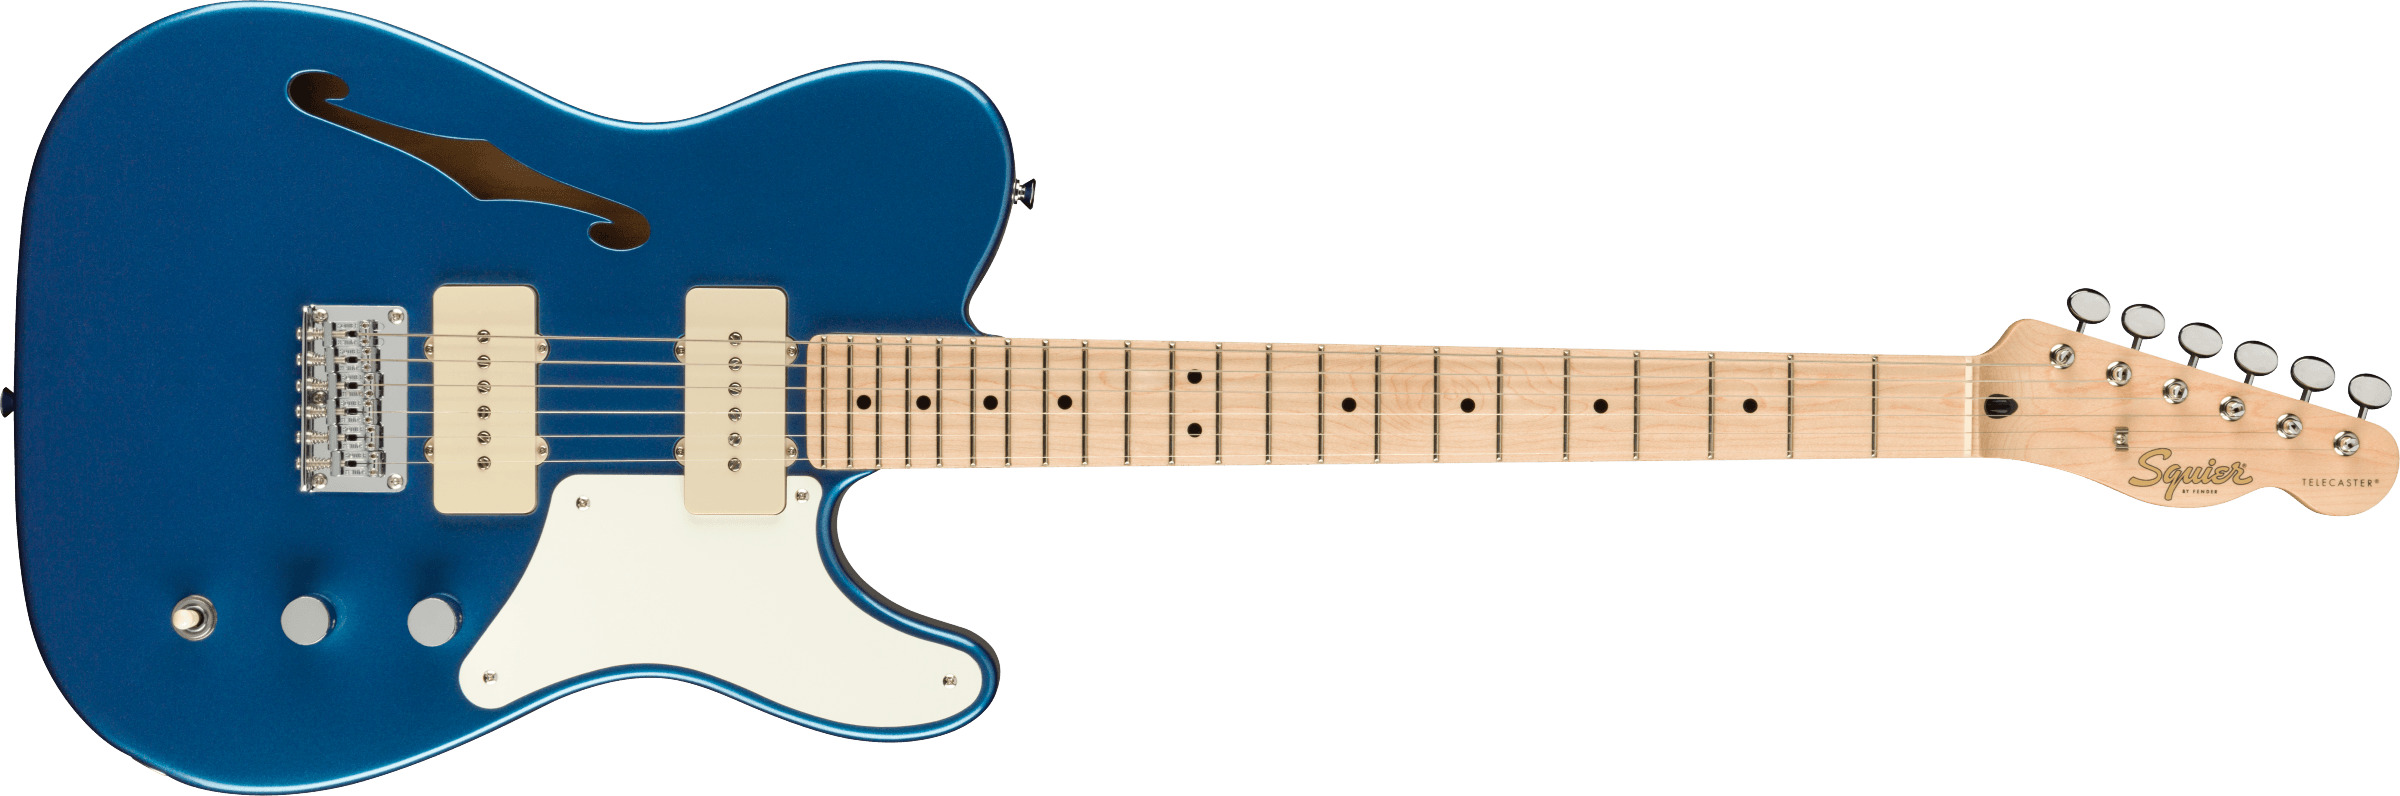 Se Fender Squier Paranormal Cabronita Telecaster Thinline El-guitar (Lake Placid Blue) hos Drum City